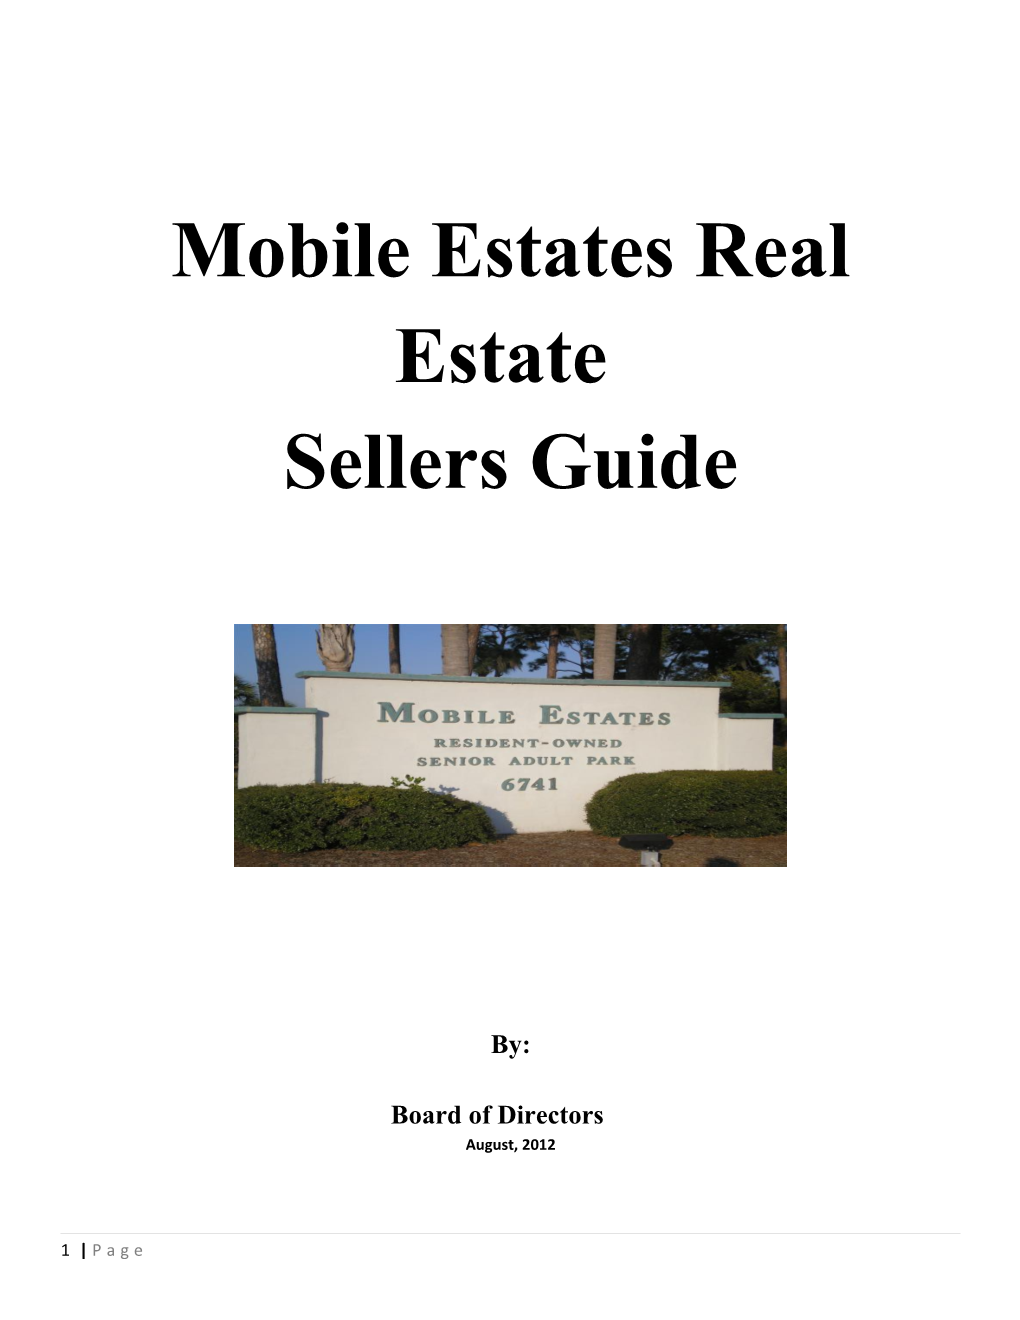 Mobile Estates Real Estate